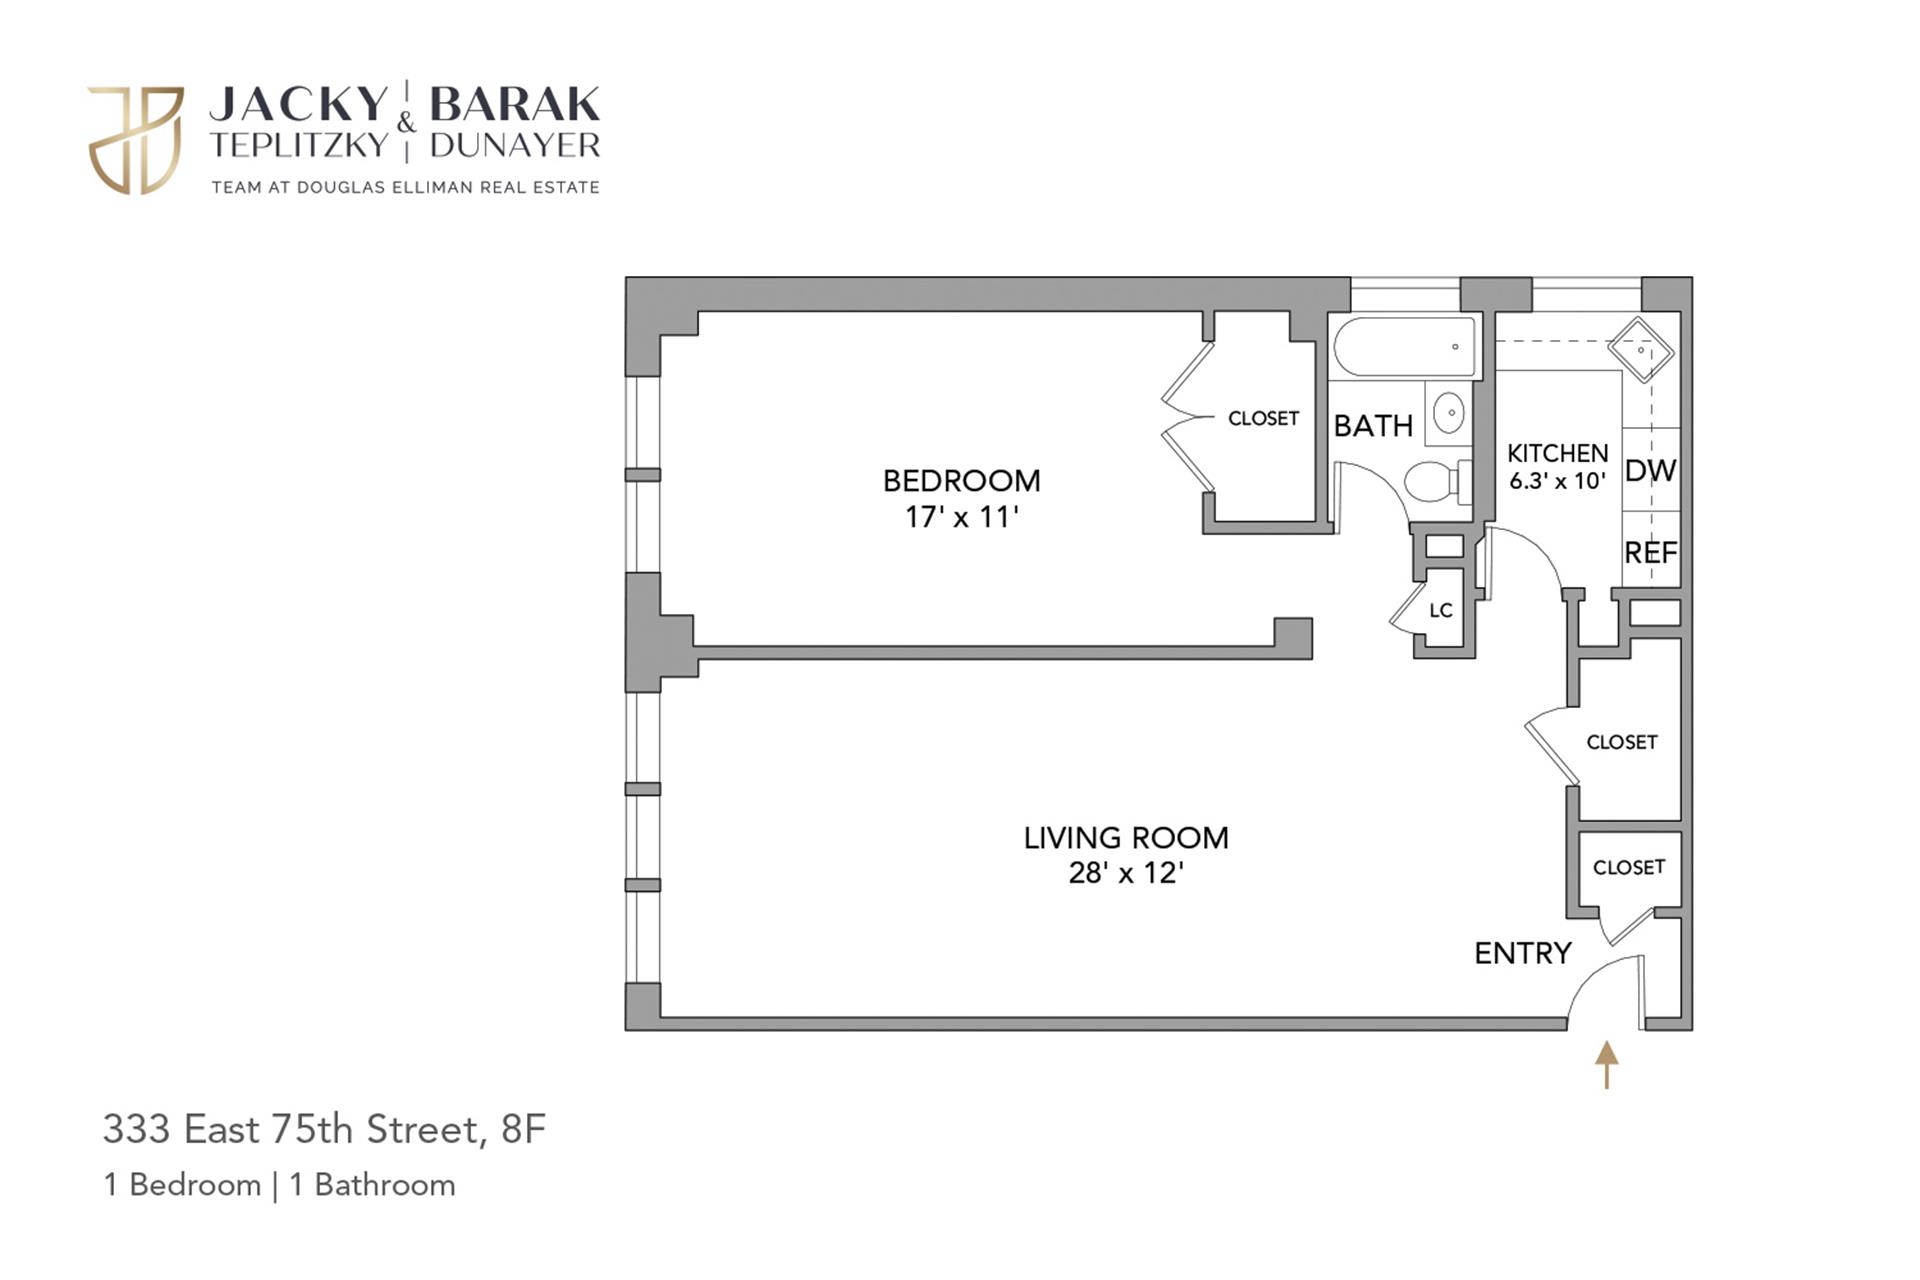 Floorplan for 333 East 75th Street, 8F